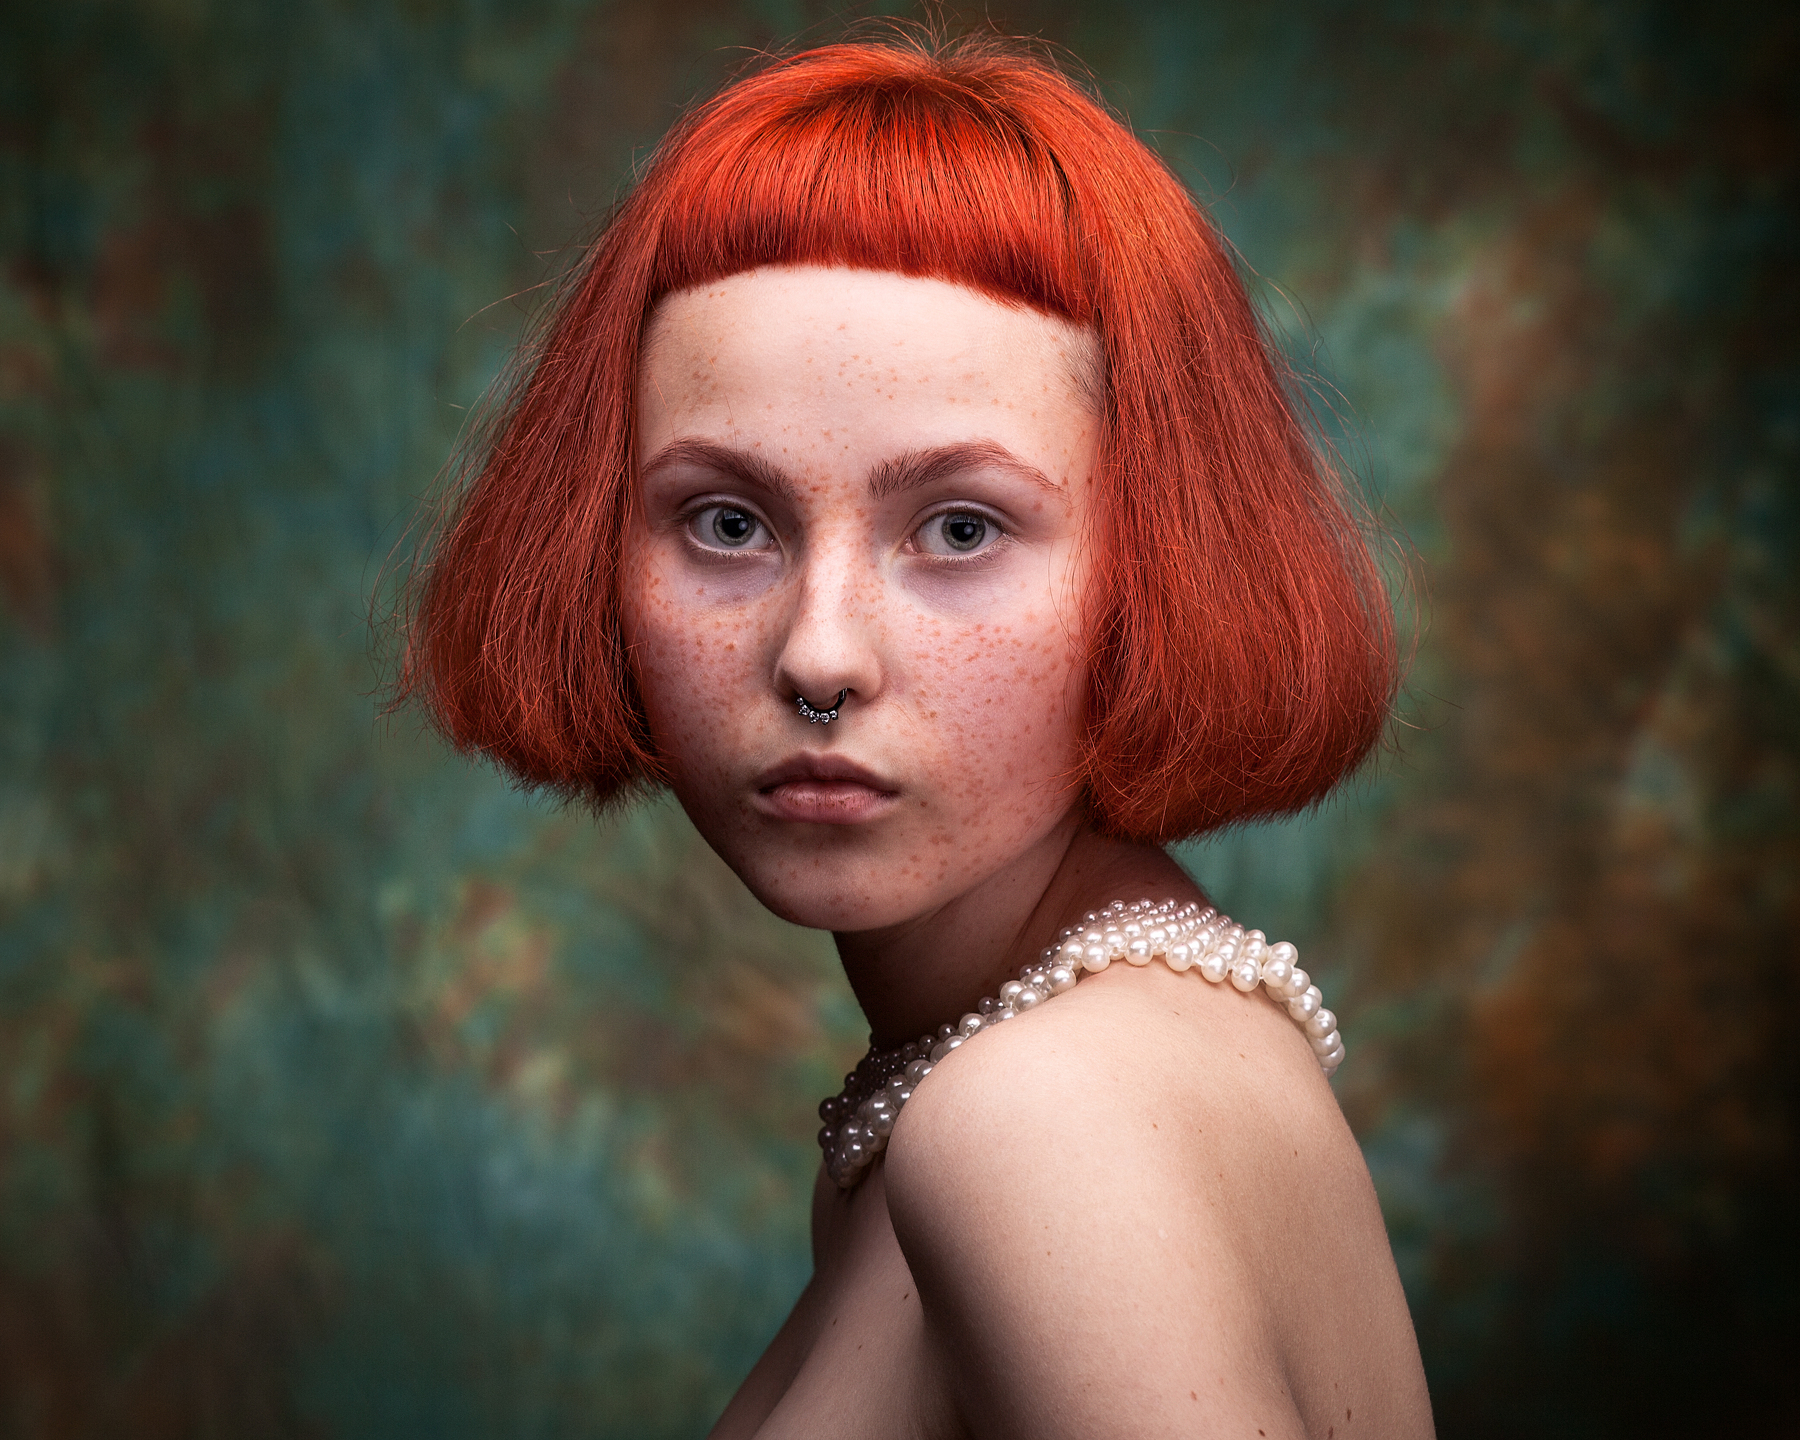 Wallpapers red hair short hair portrait on the desktop